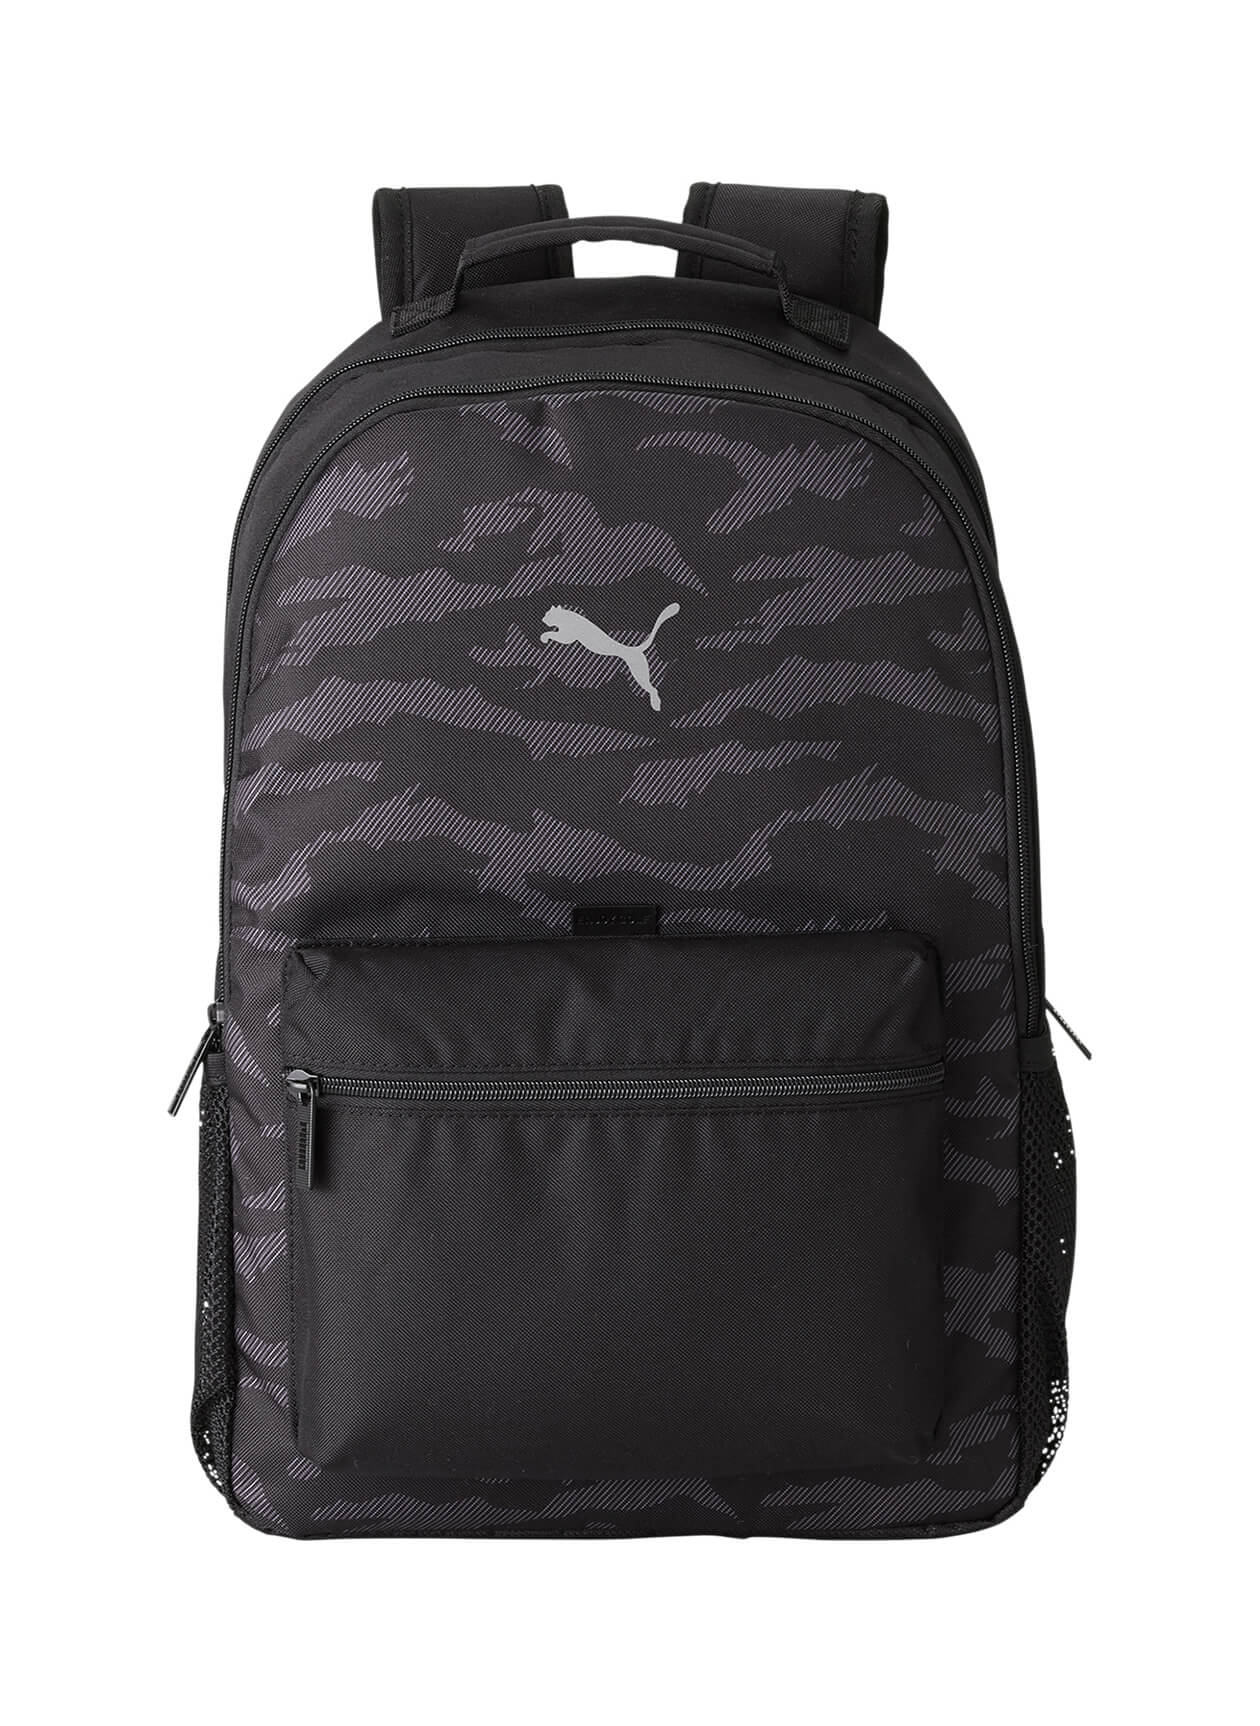 PUMA Black Camo Backpack